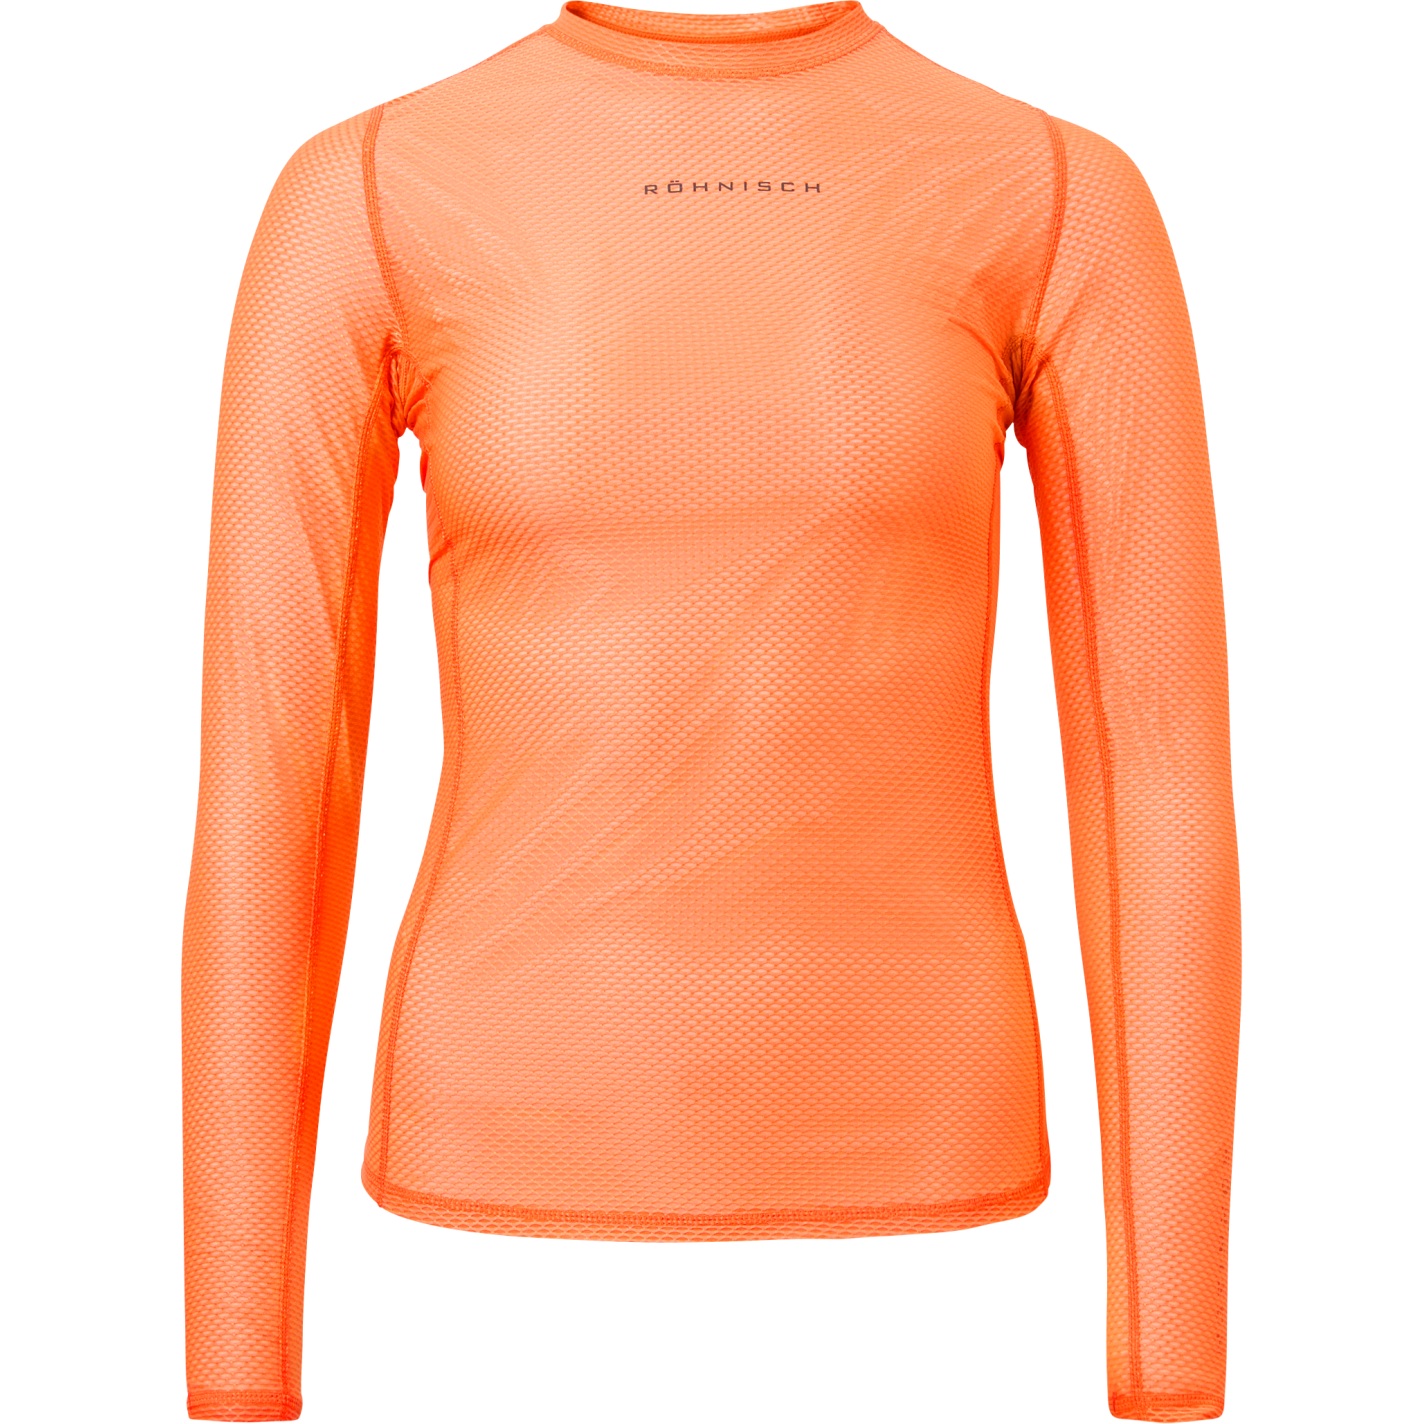 Foto de Röhnisch Camiseta de Manga Larga Mujer - Structure Block - Blazing Orange